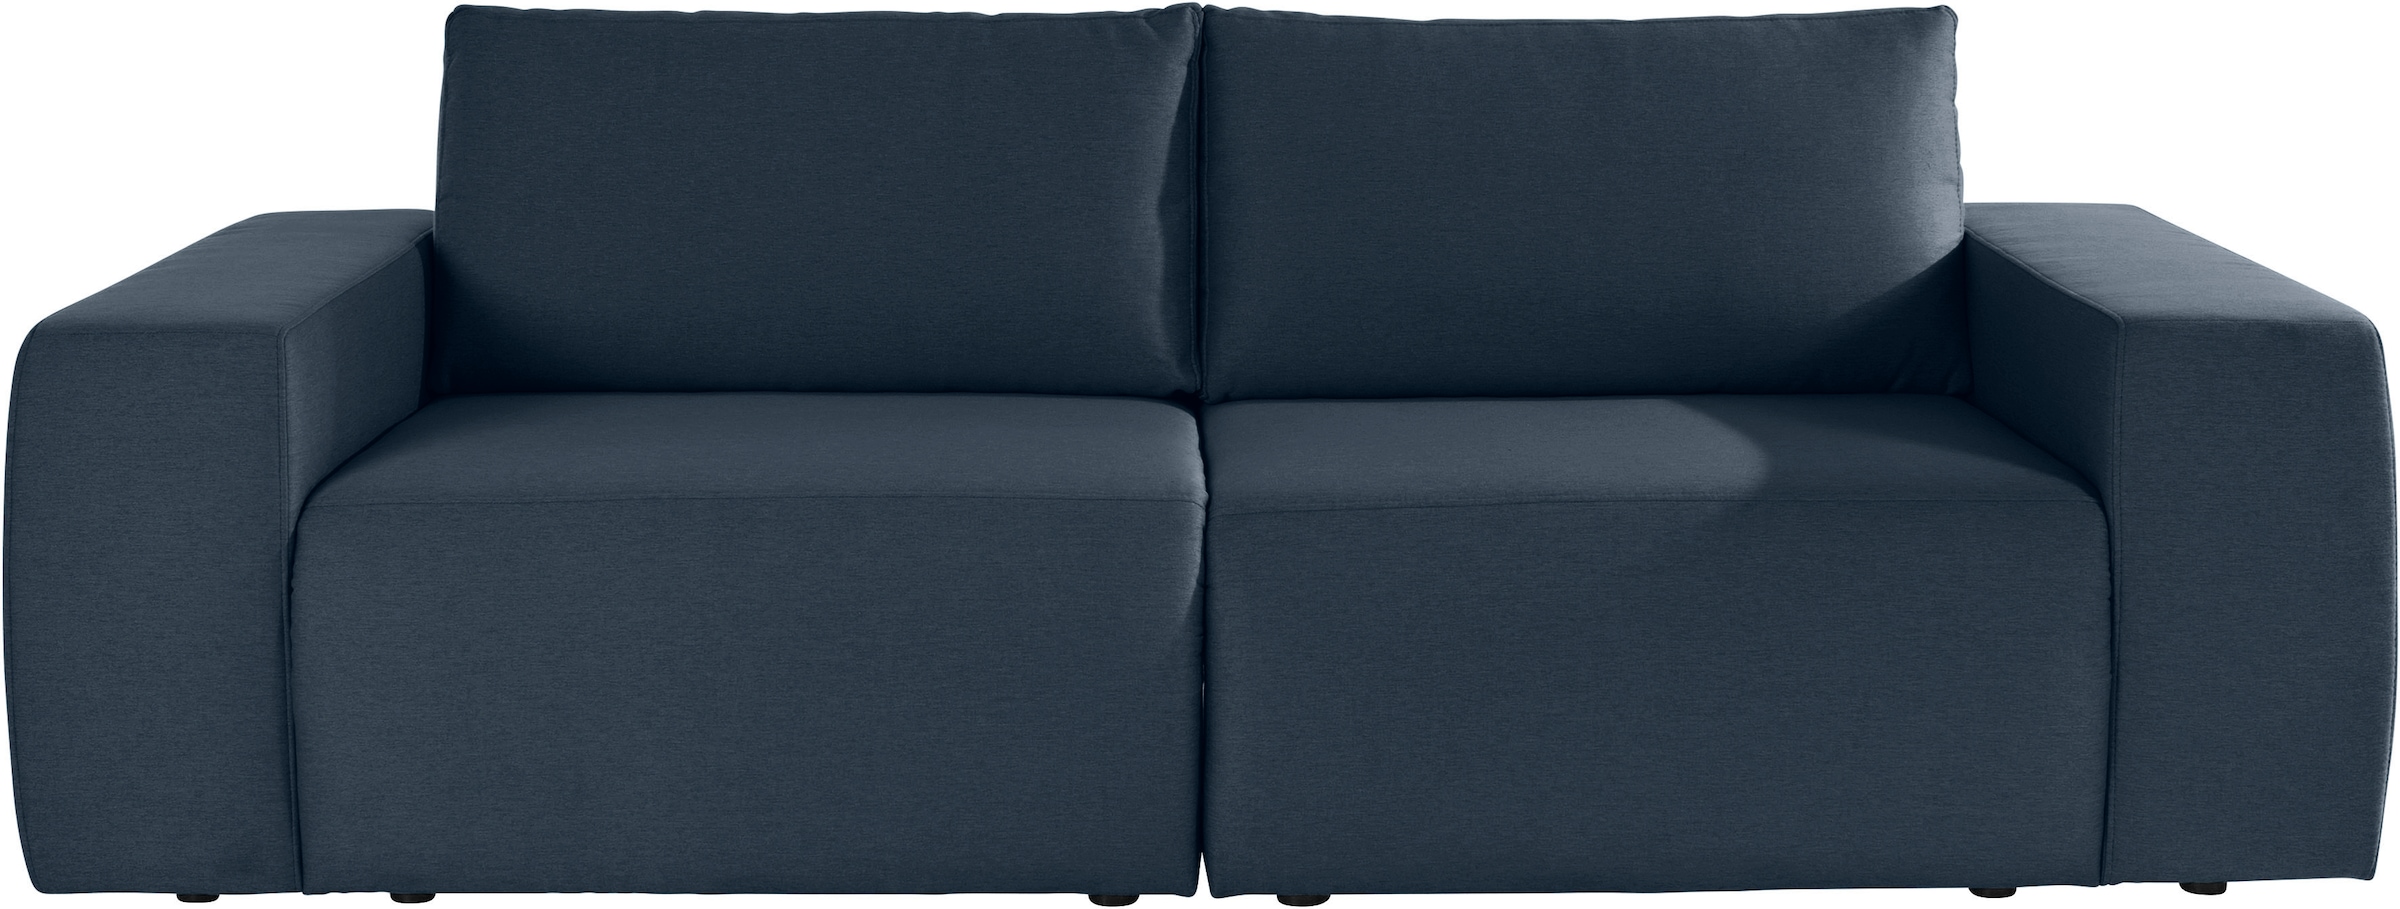 BAUR komfortabel und | Wolfgang Joop kaufen »LooksII«, geradlinig Big-Sofa LOOKS by